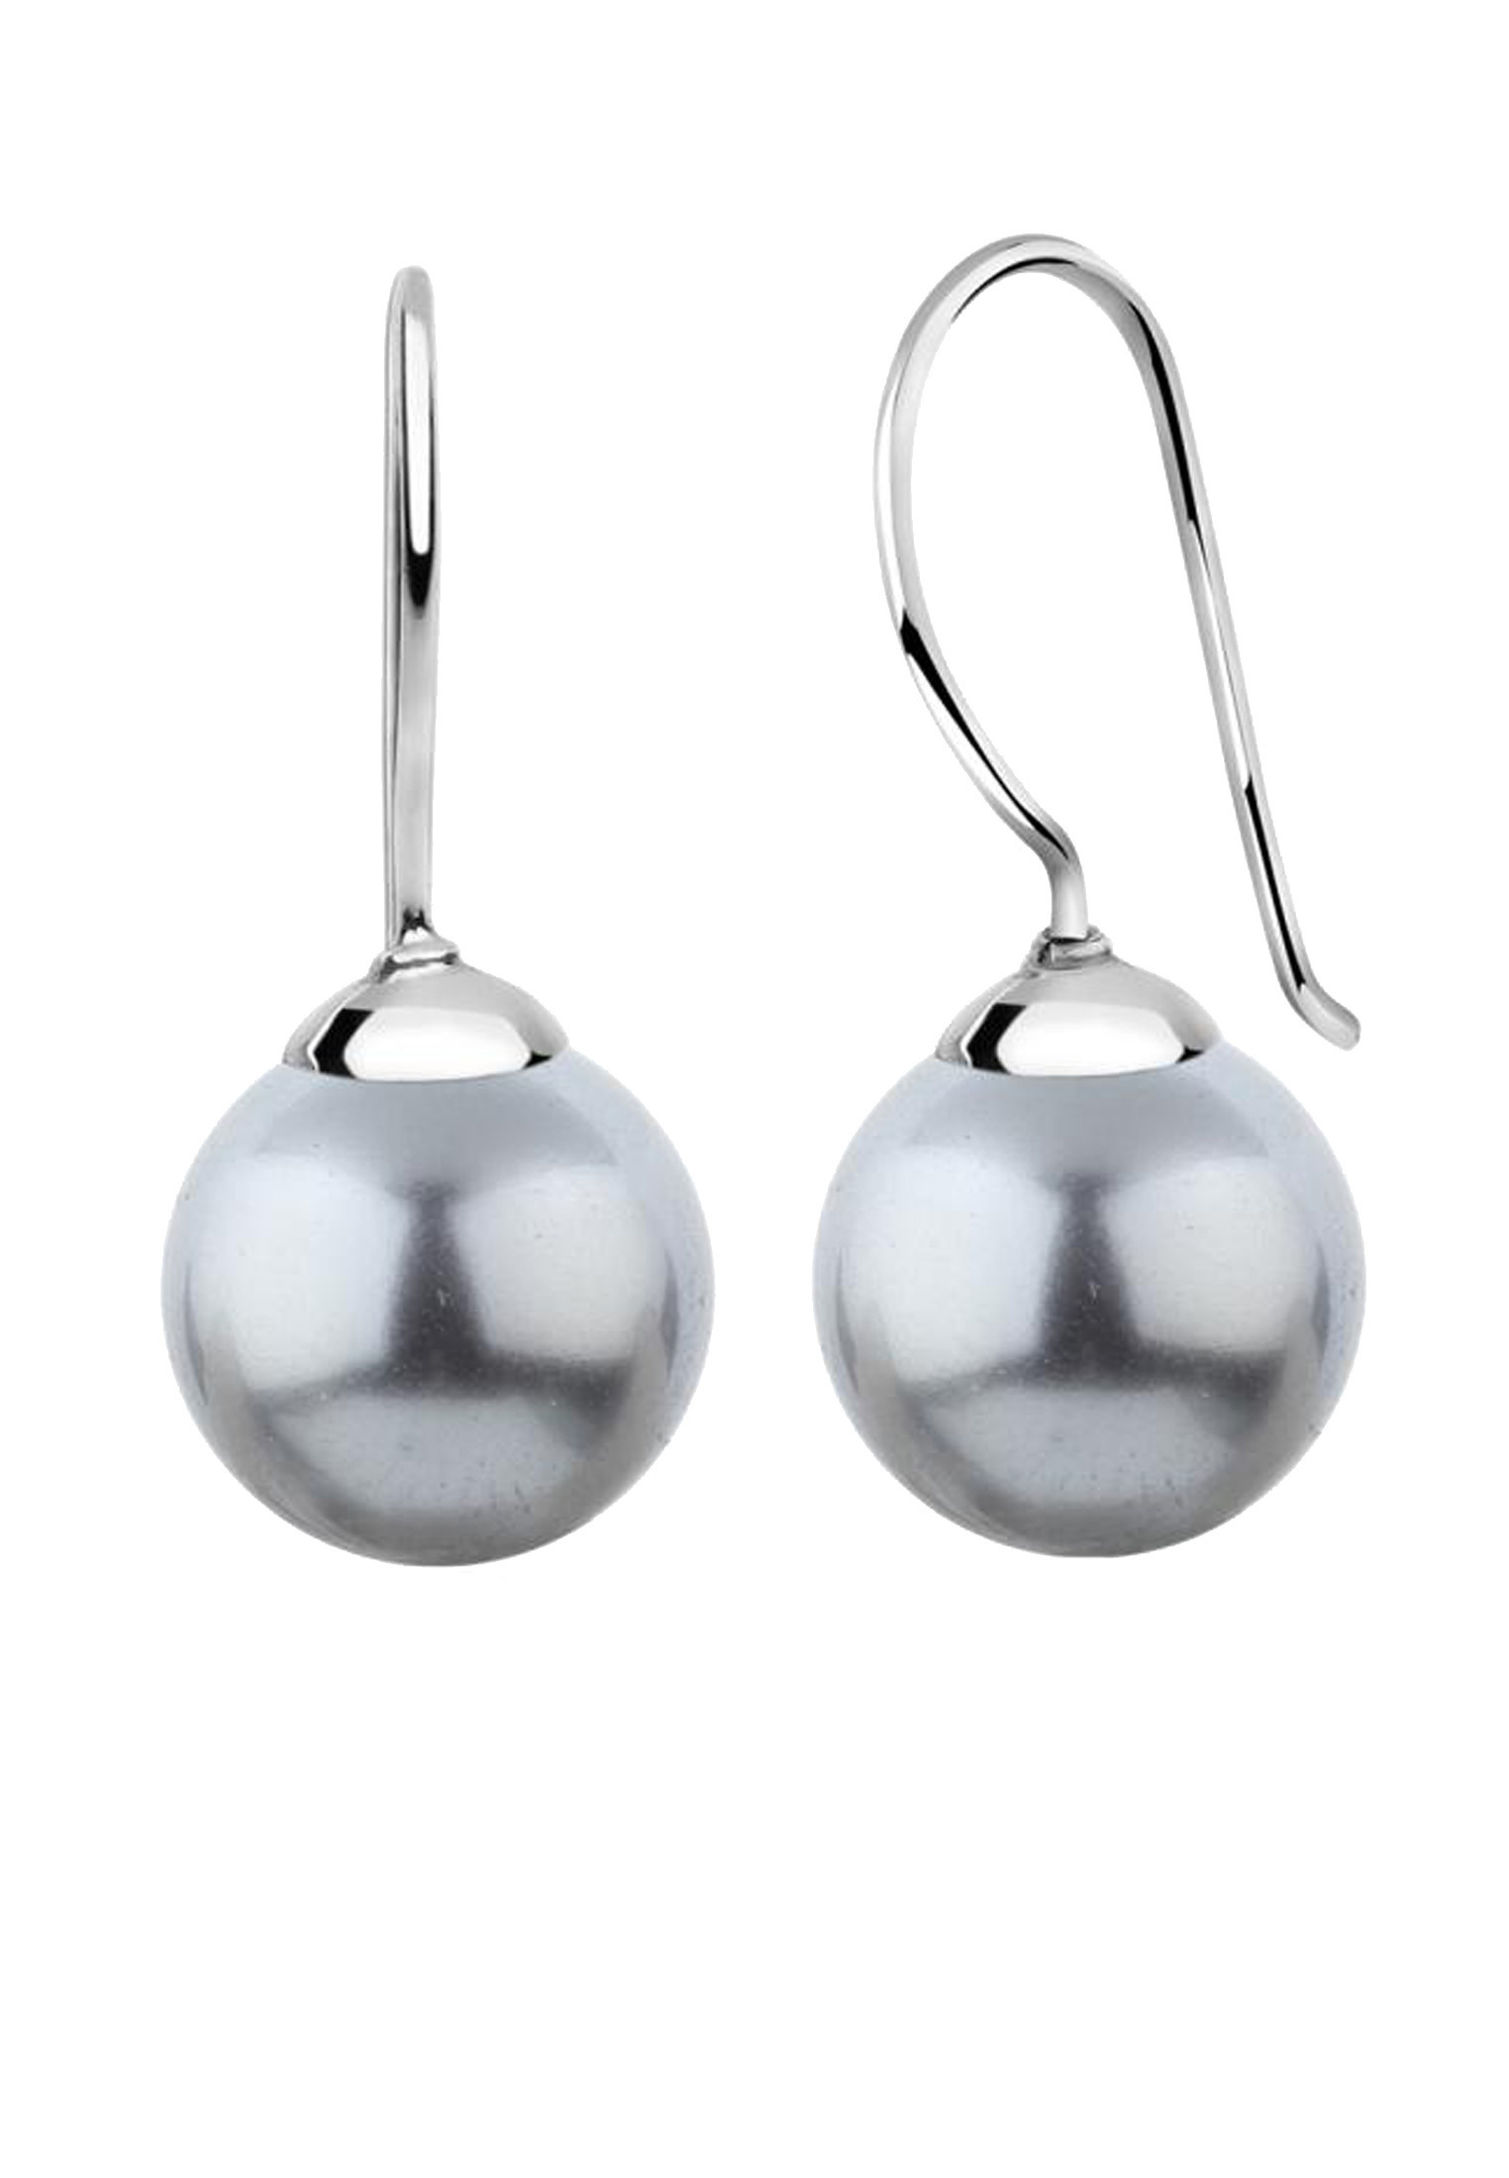 Nenalina Ohrringe Hänger Basic Synthetische Perle 925 Silber Farbe: Silber  | Weltbild.de